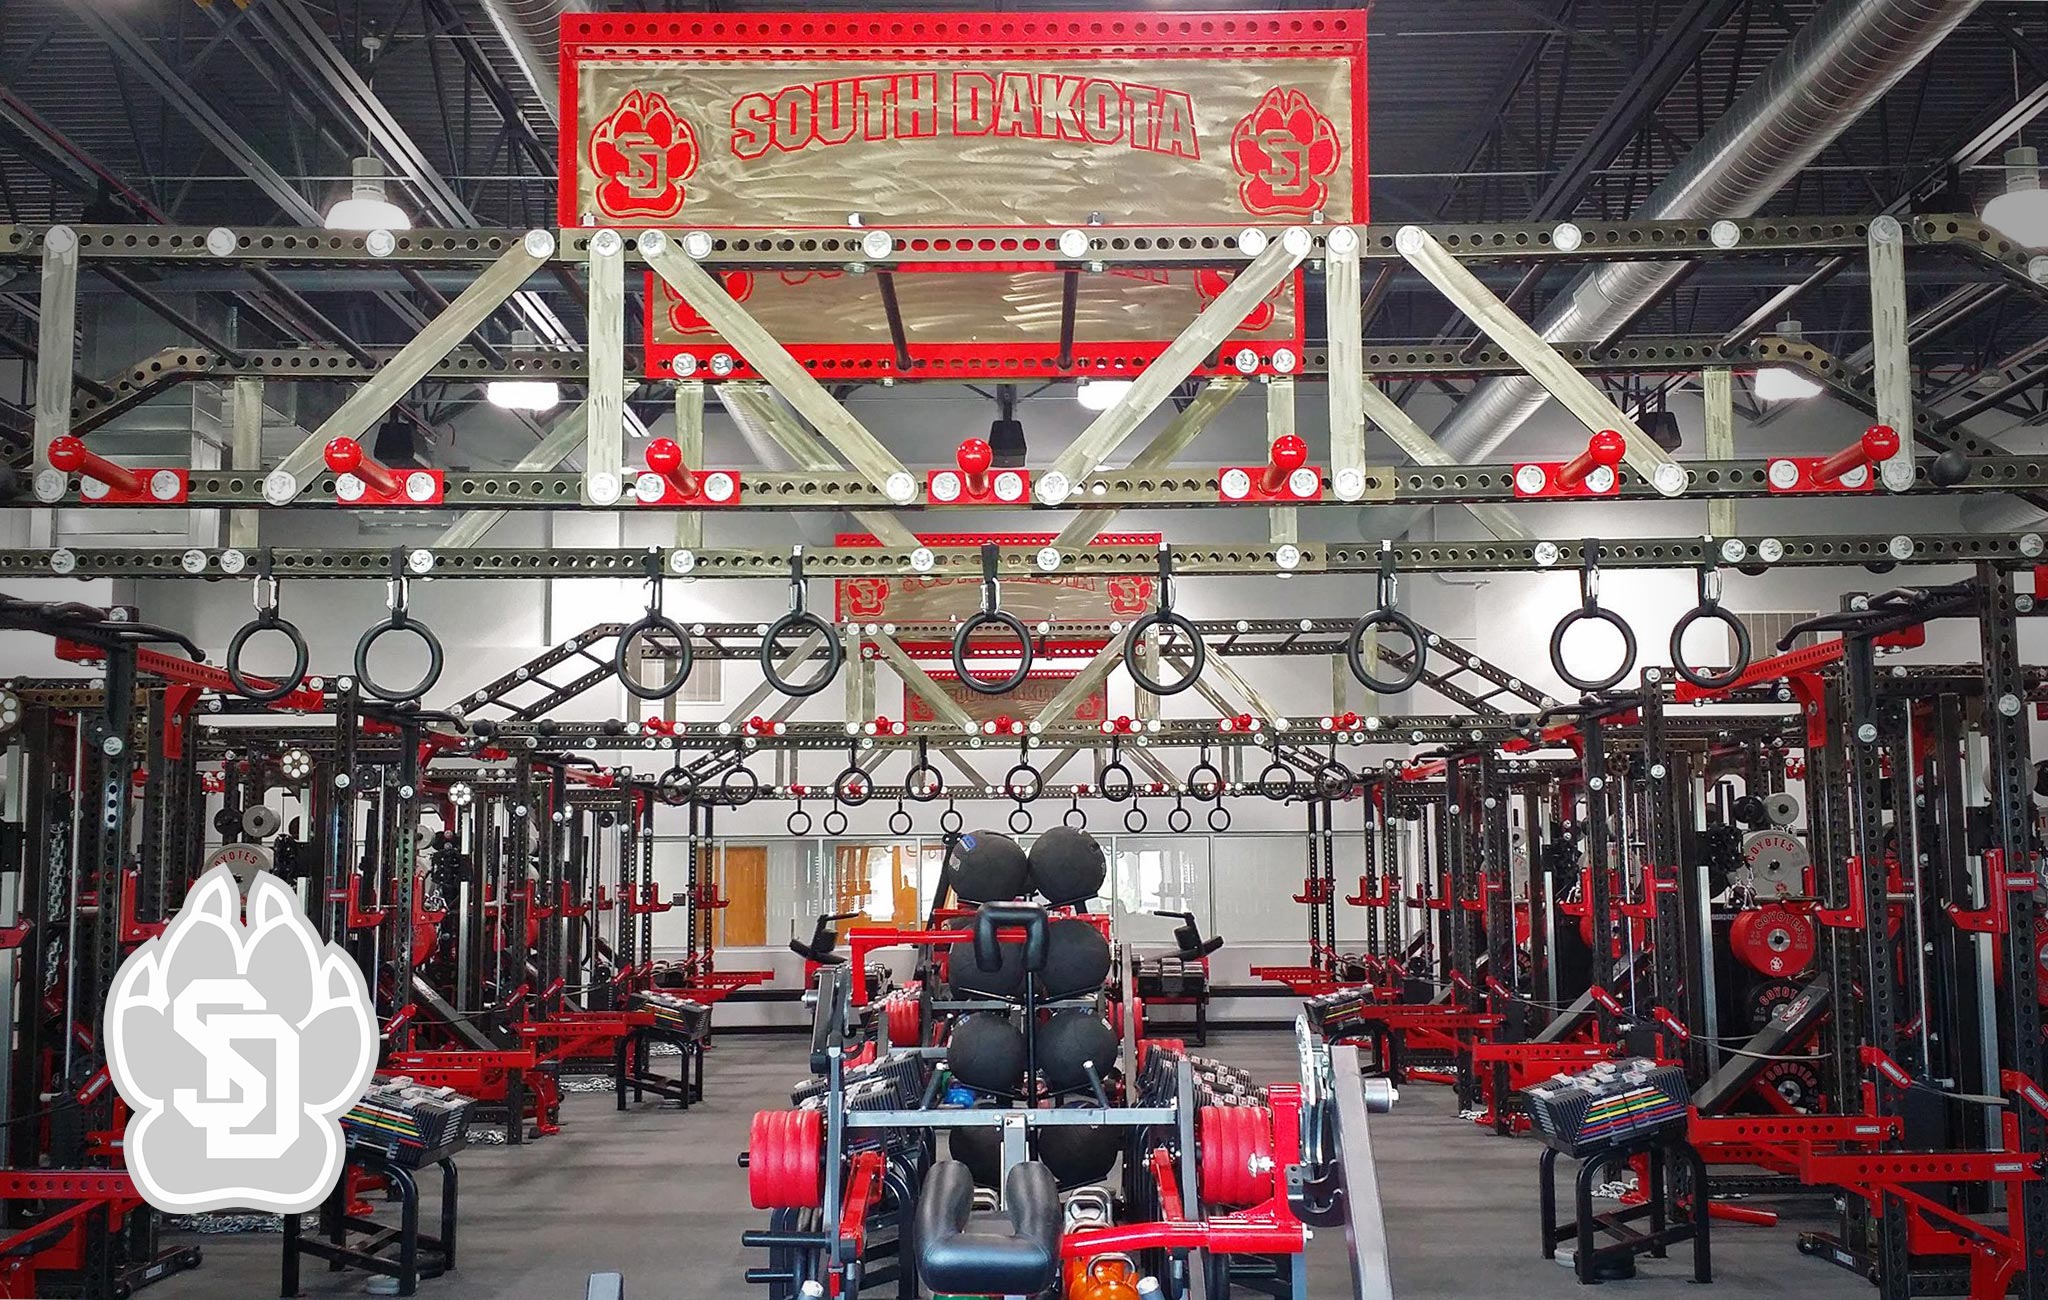 University of South Dakota Sorinex strength and conditioning facility